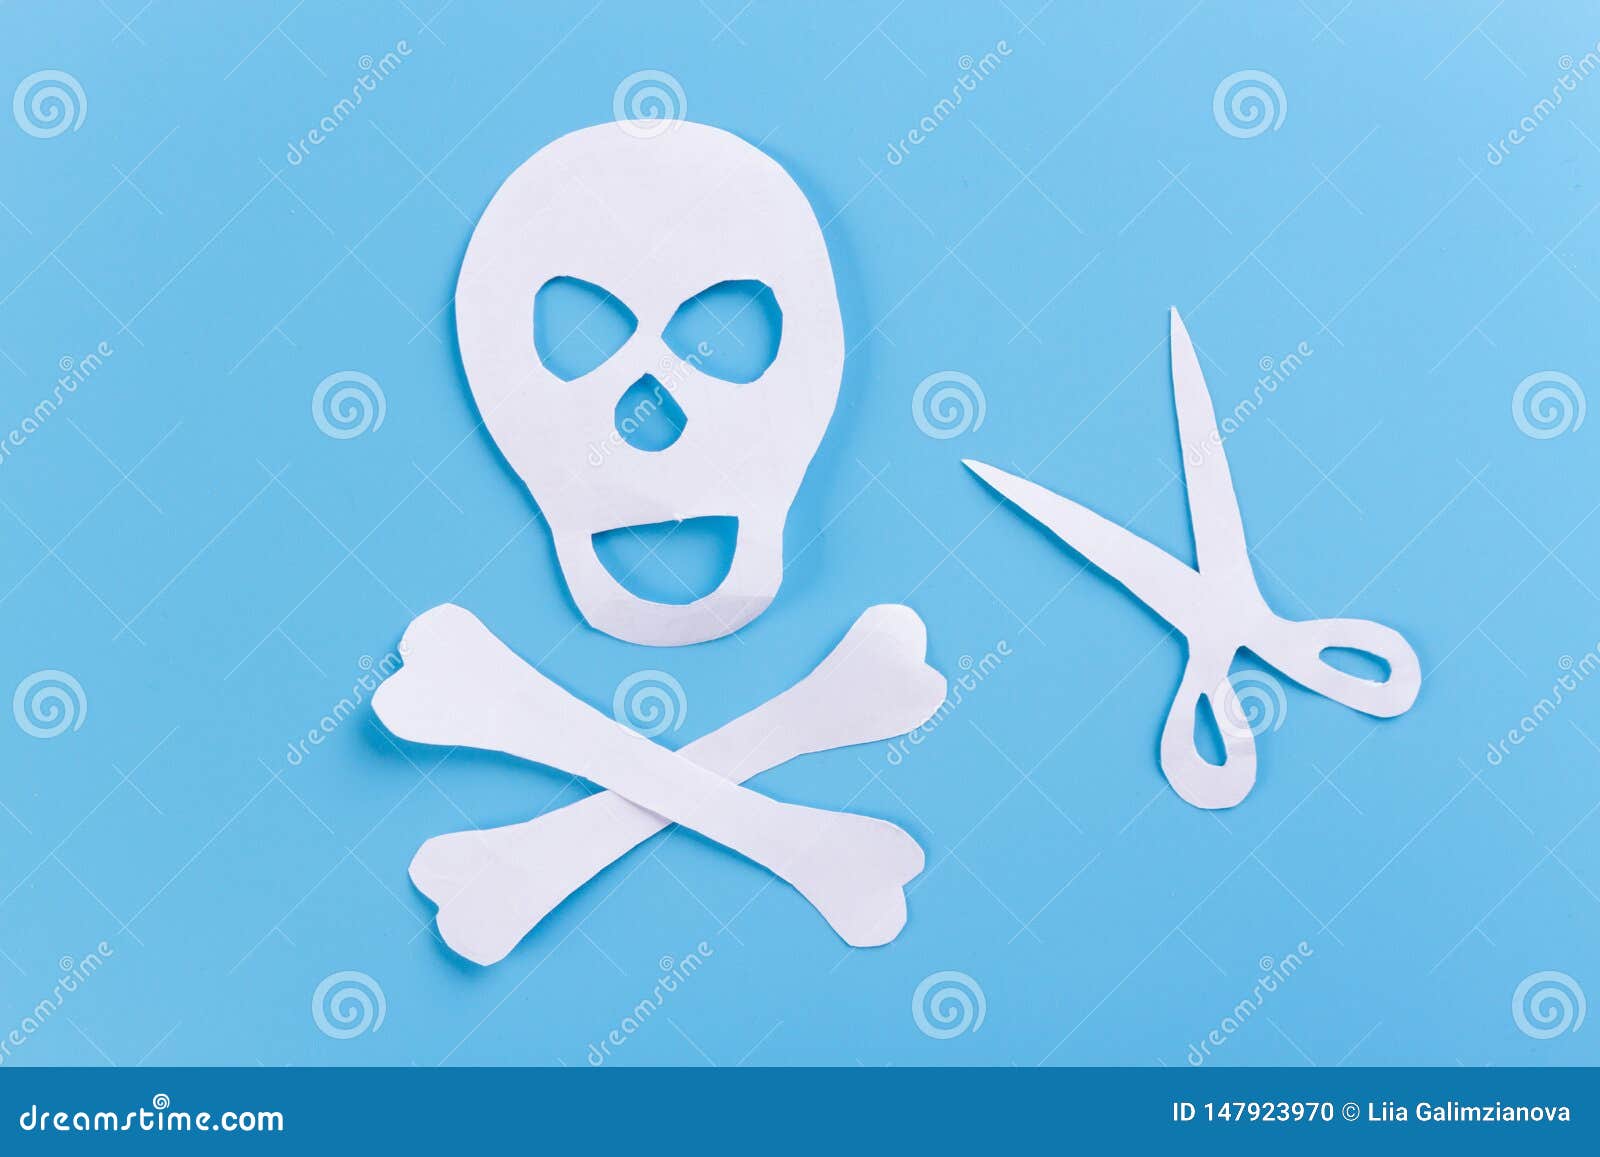 Skully Scissors